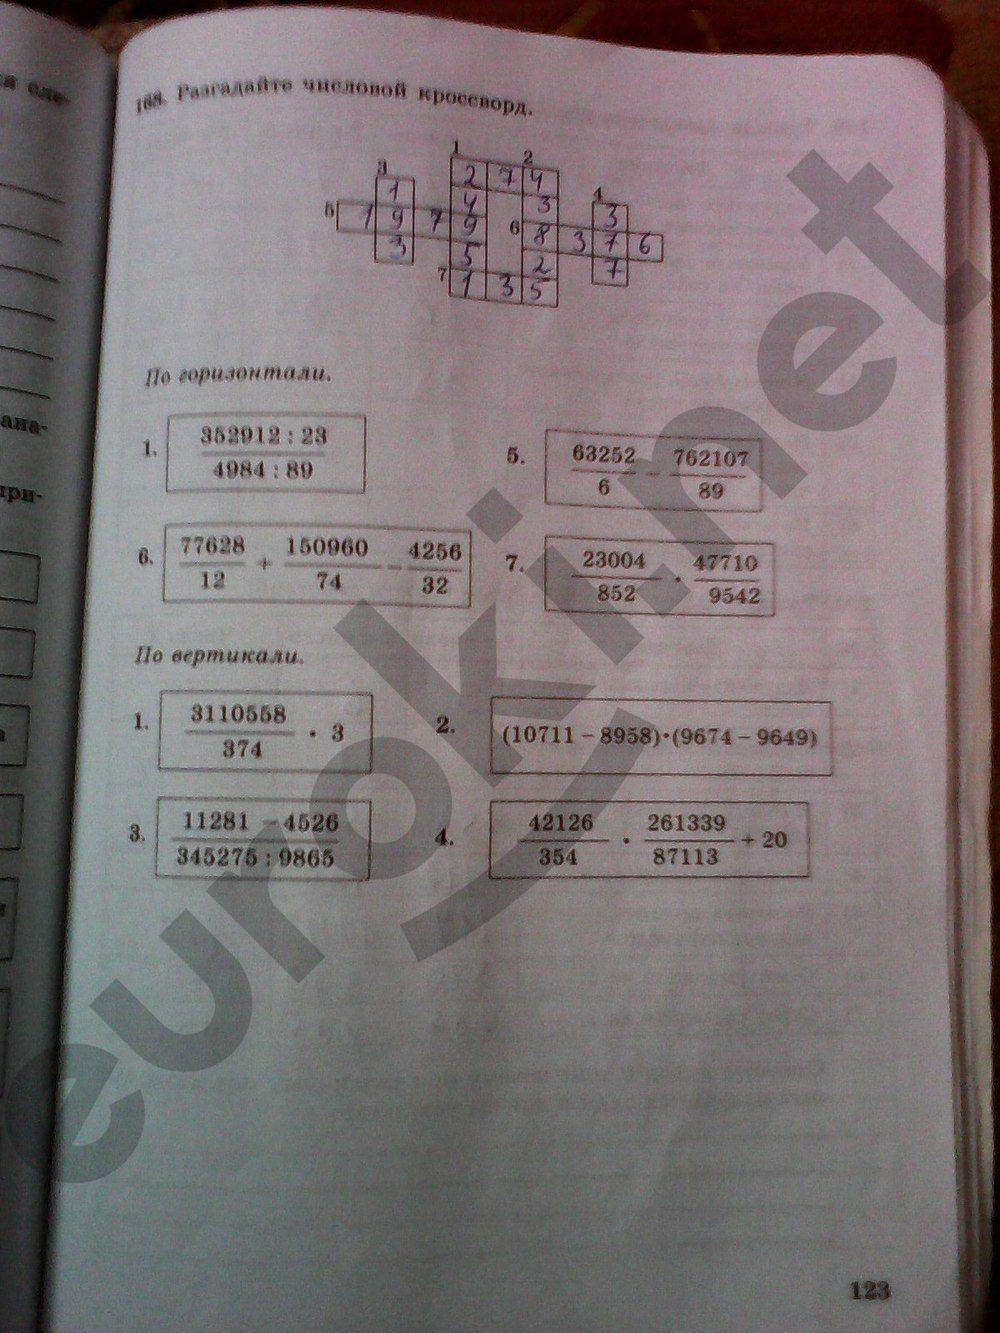 ГДЗ Информатика 5 класс - стр. 123